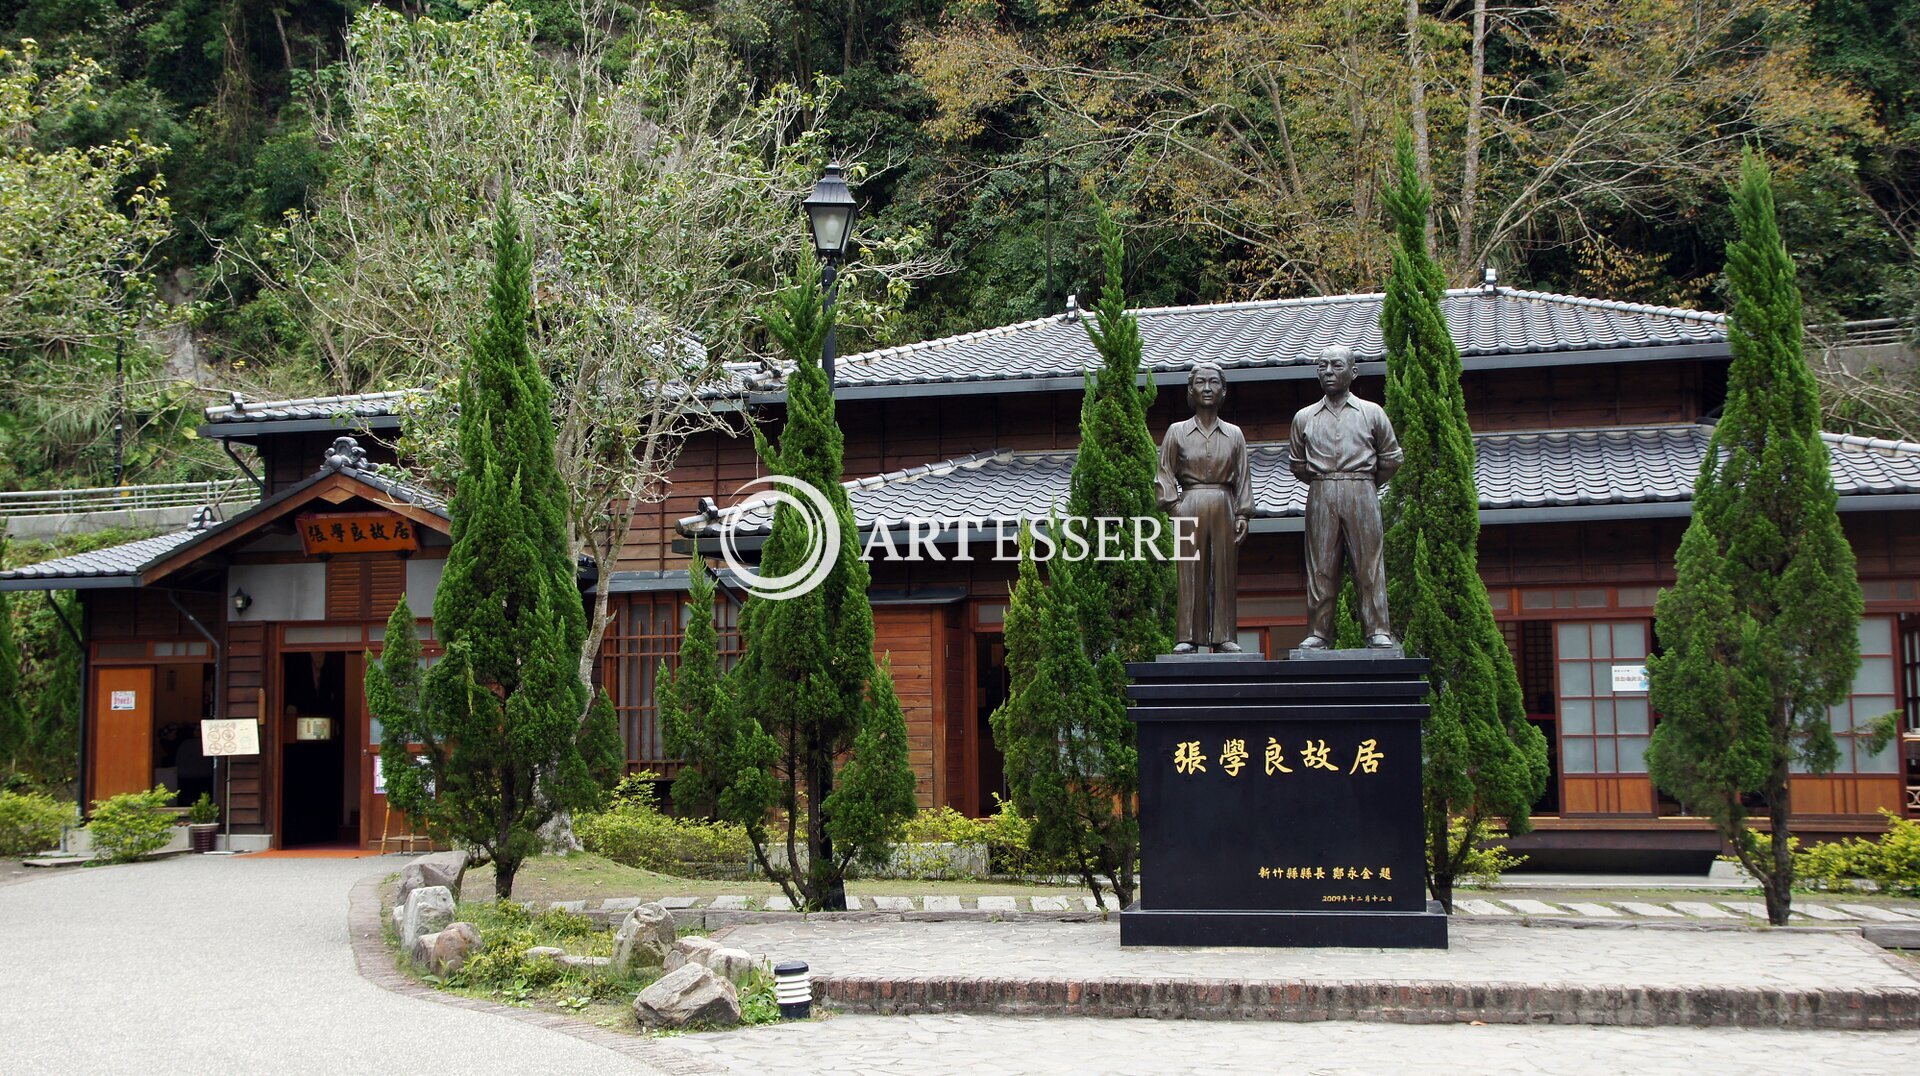 Former Residence of Zhang Zuolin and Zhang Xueliang